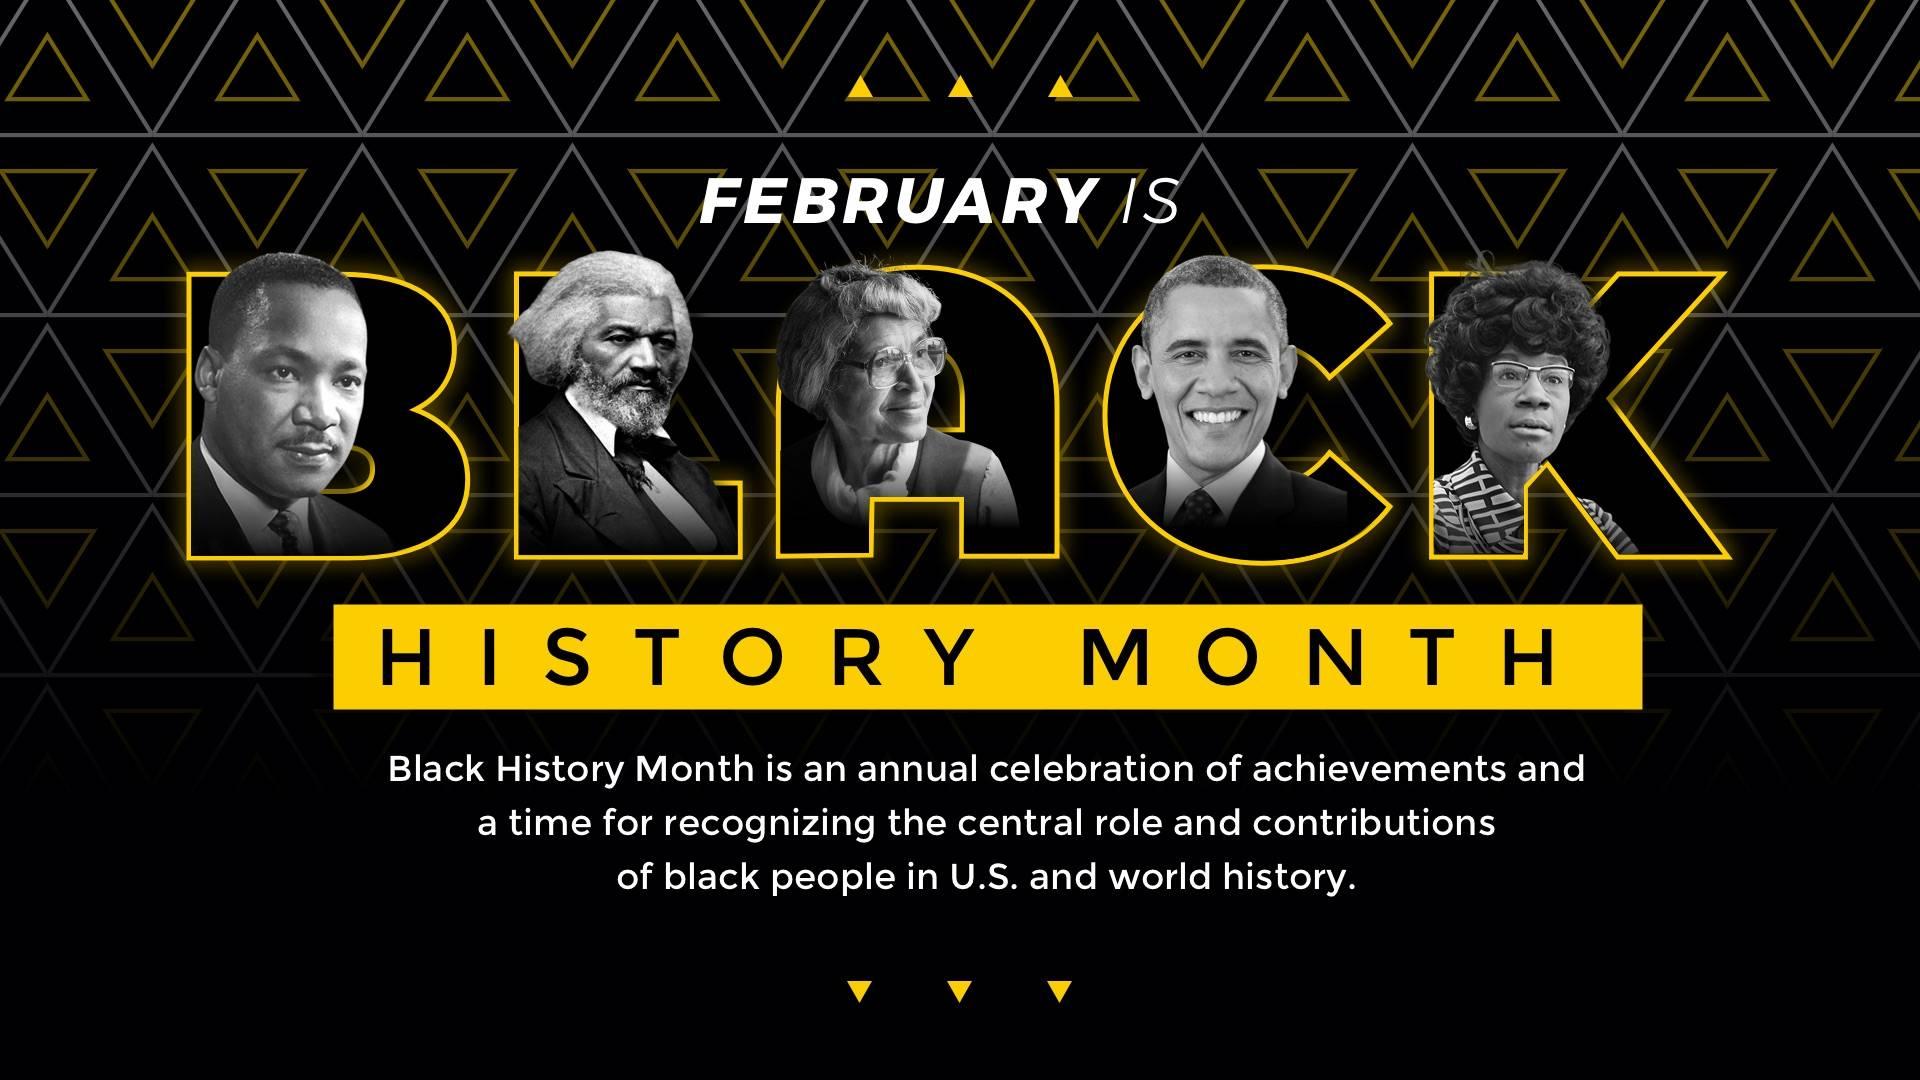 Black History Month Digital Signage Template